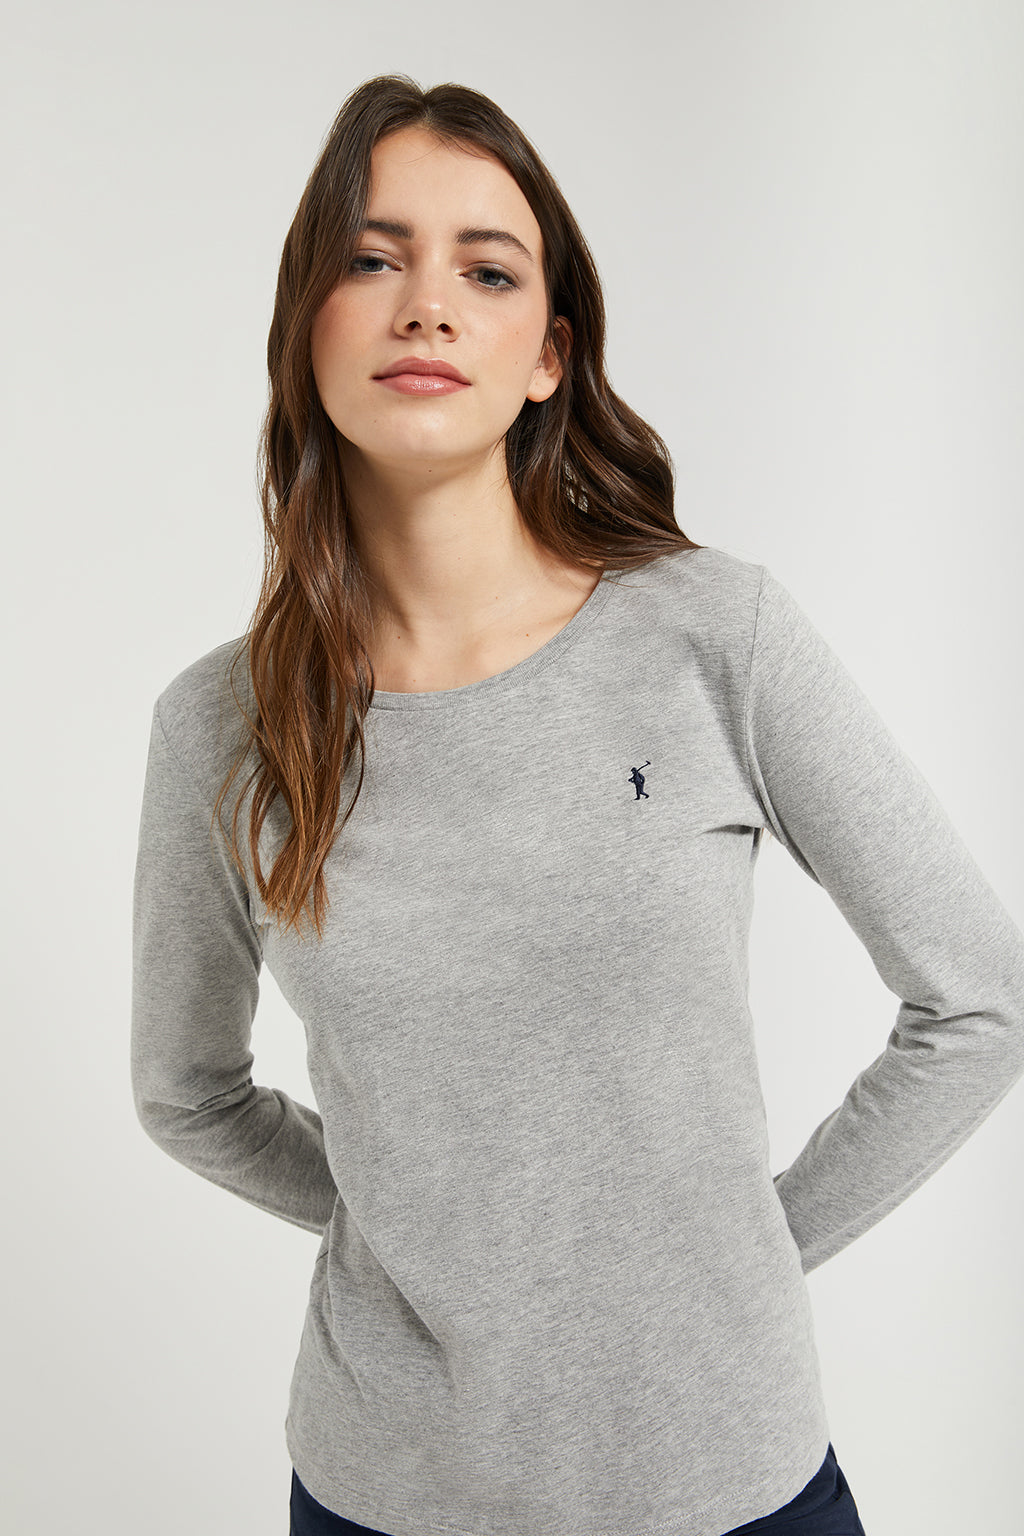 Camiseta básica gris vigoré para mujer – Polo Club